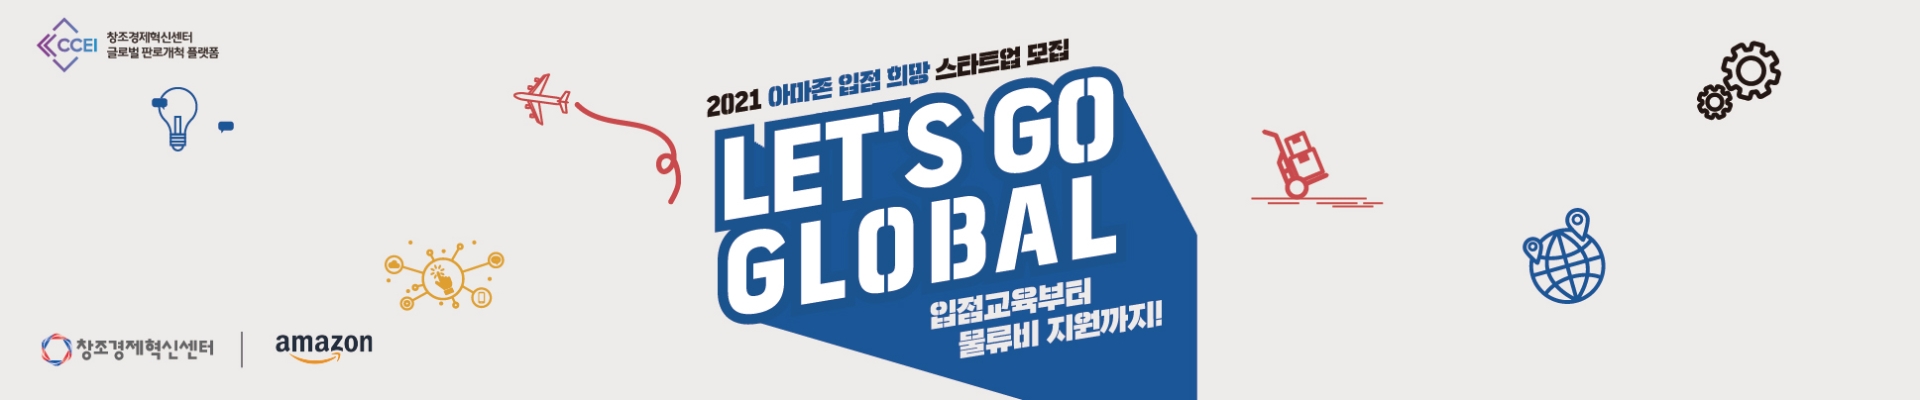 Let's Go Global 2021 입점지원 사업설명회